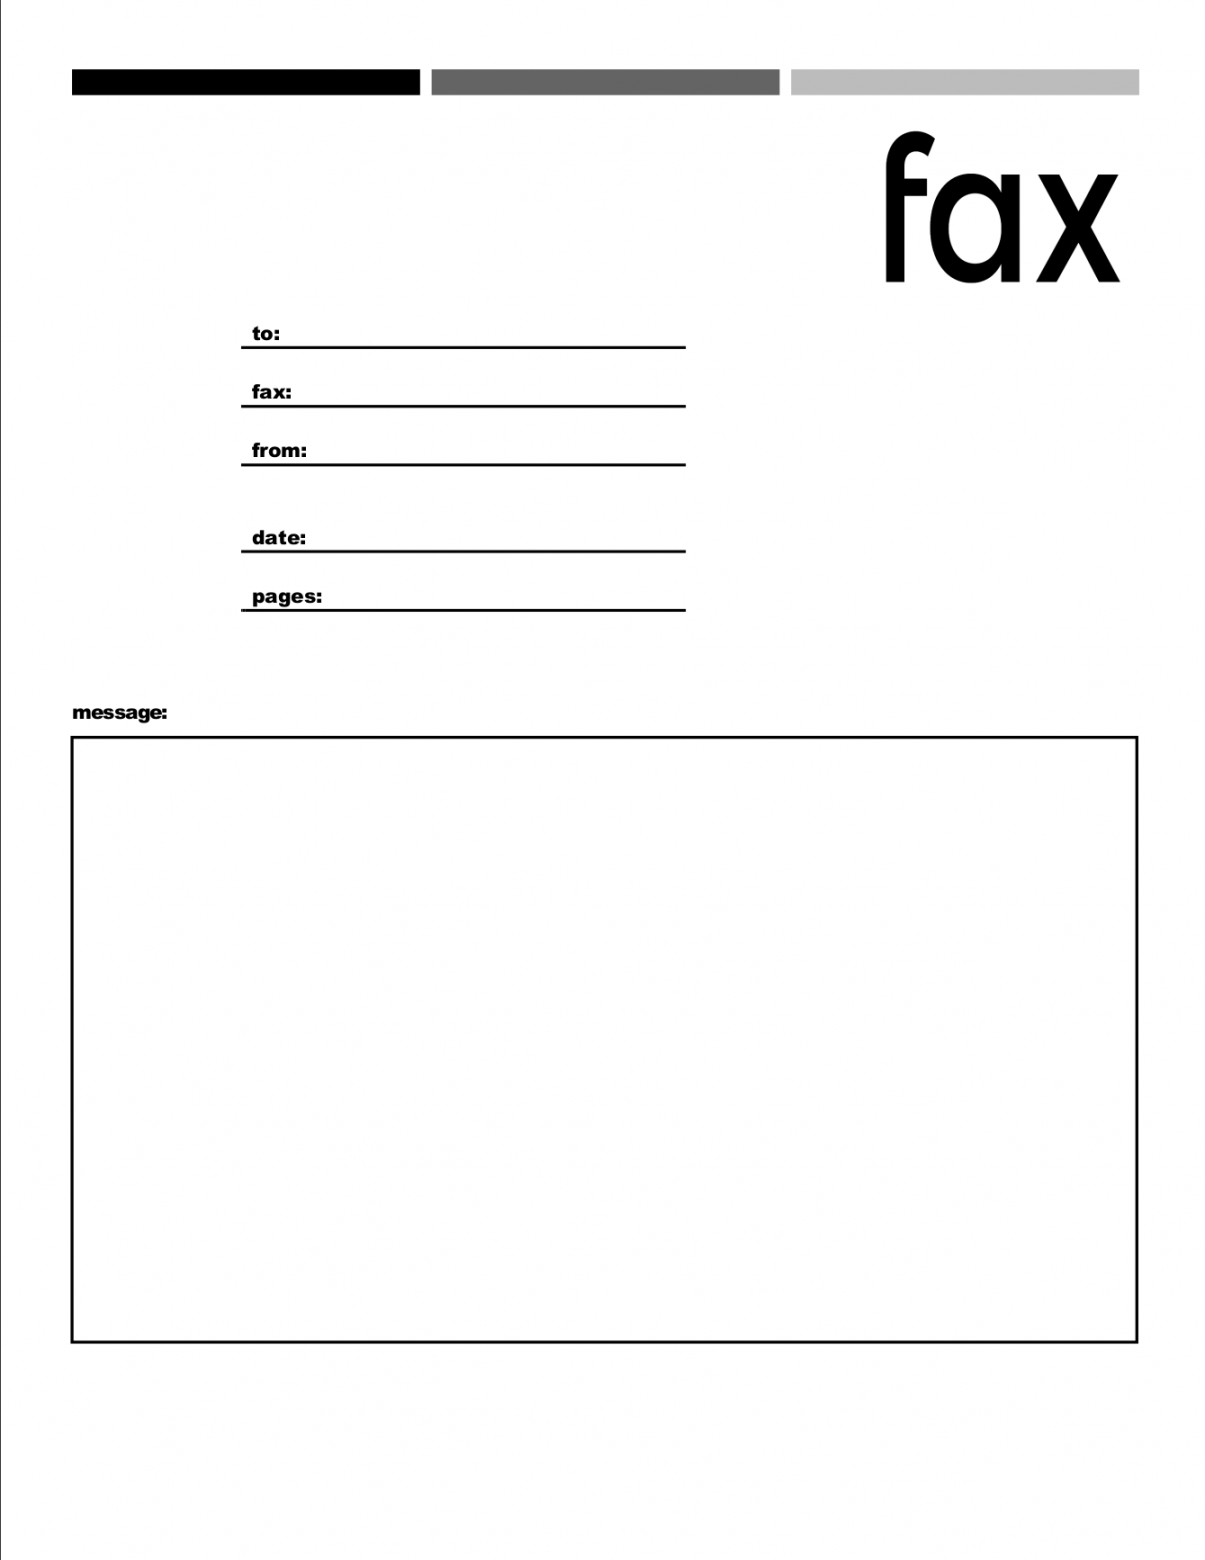 Free Printable Fax Cover Sheet - Printable - Free Fax Cover Sheets  FaxBurner